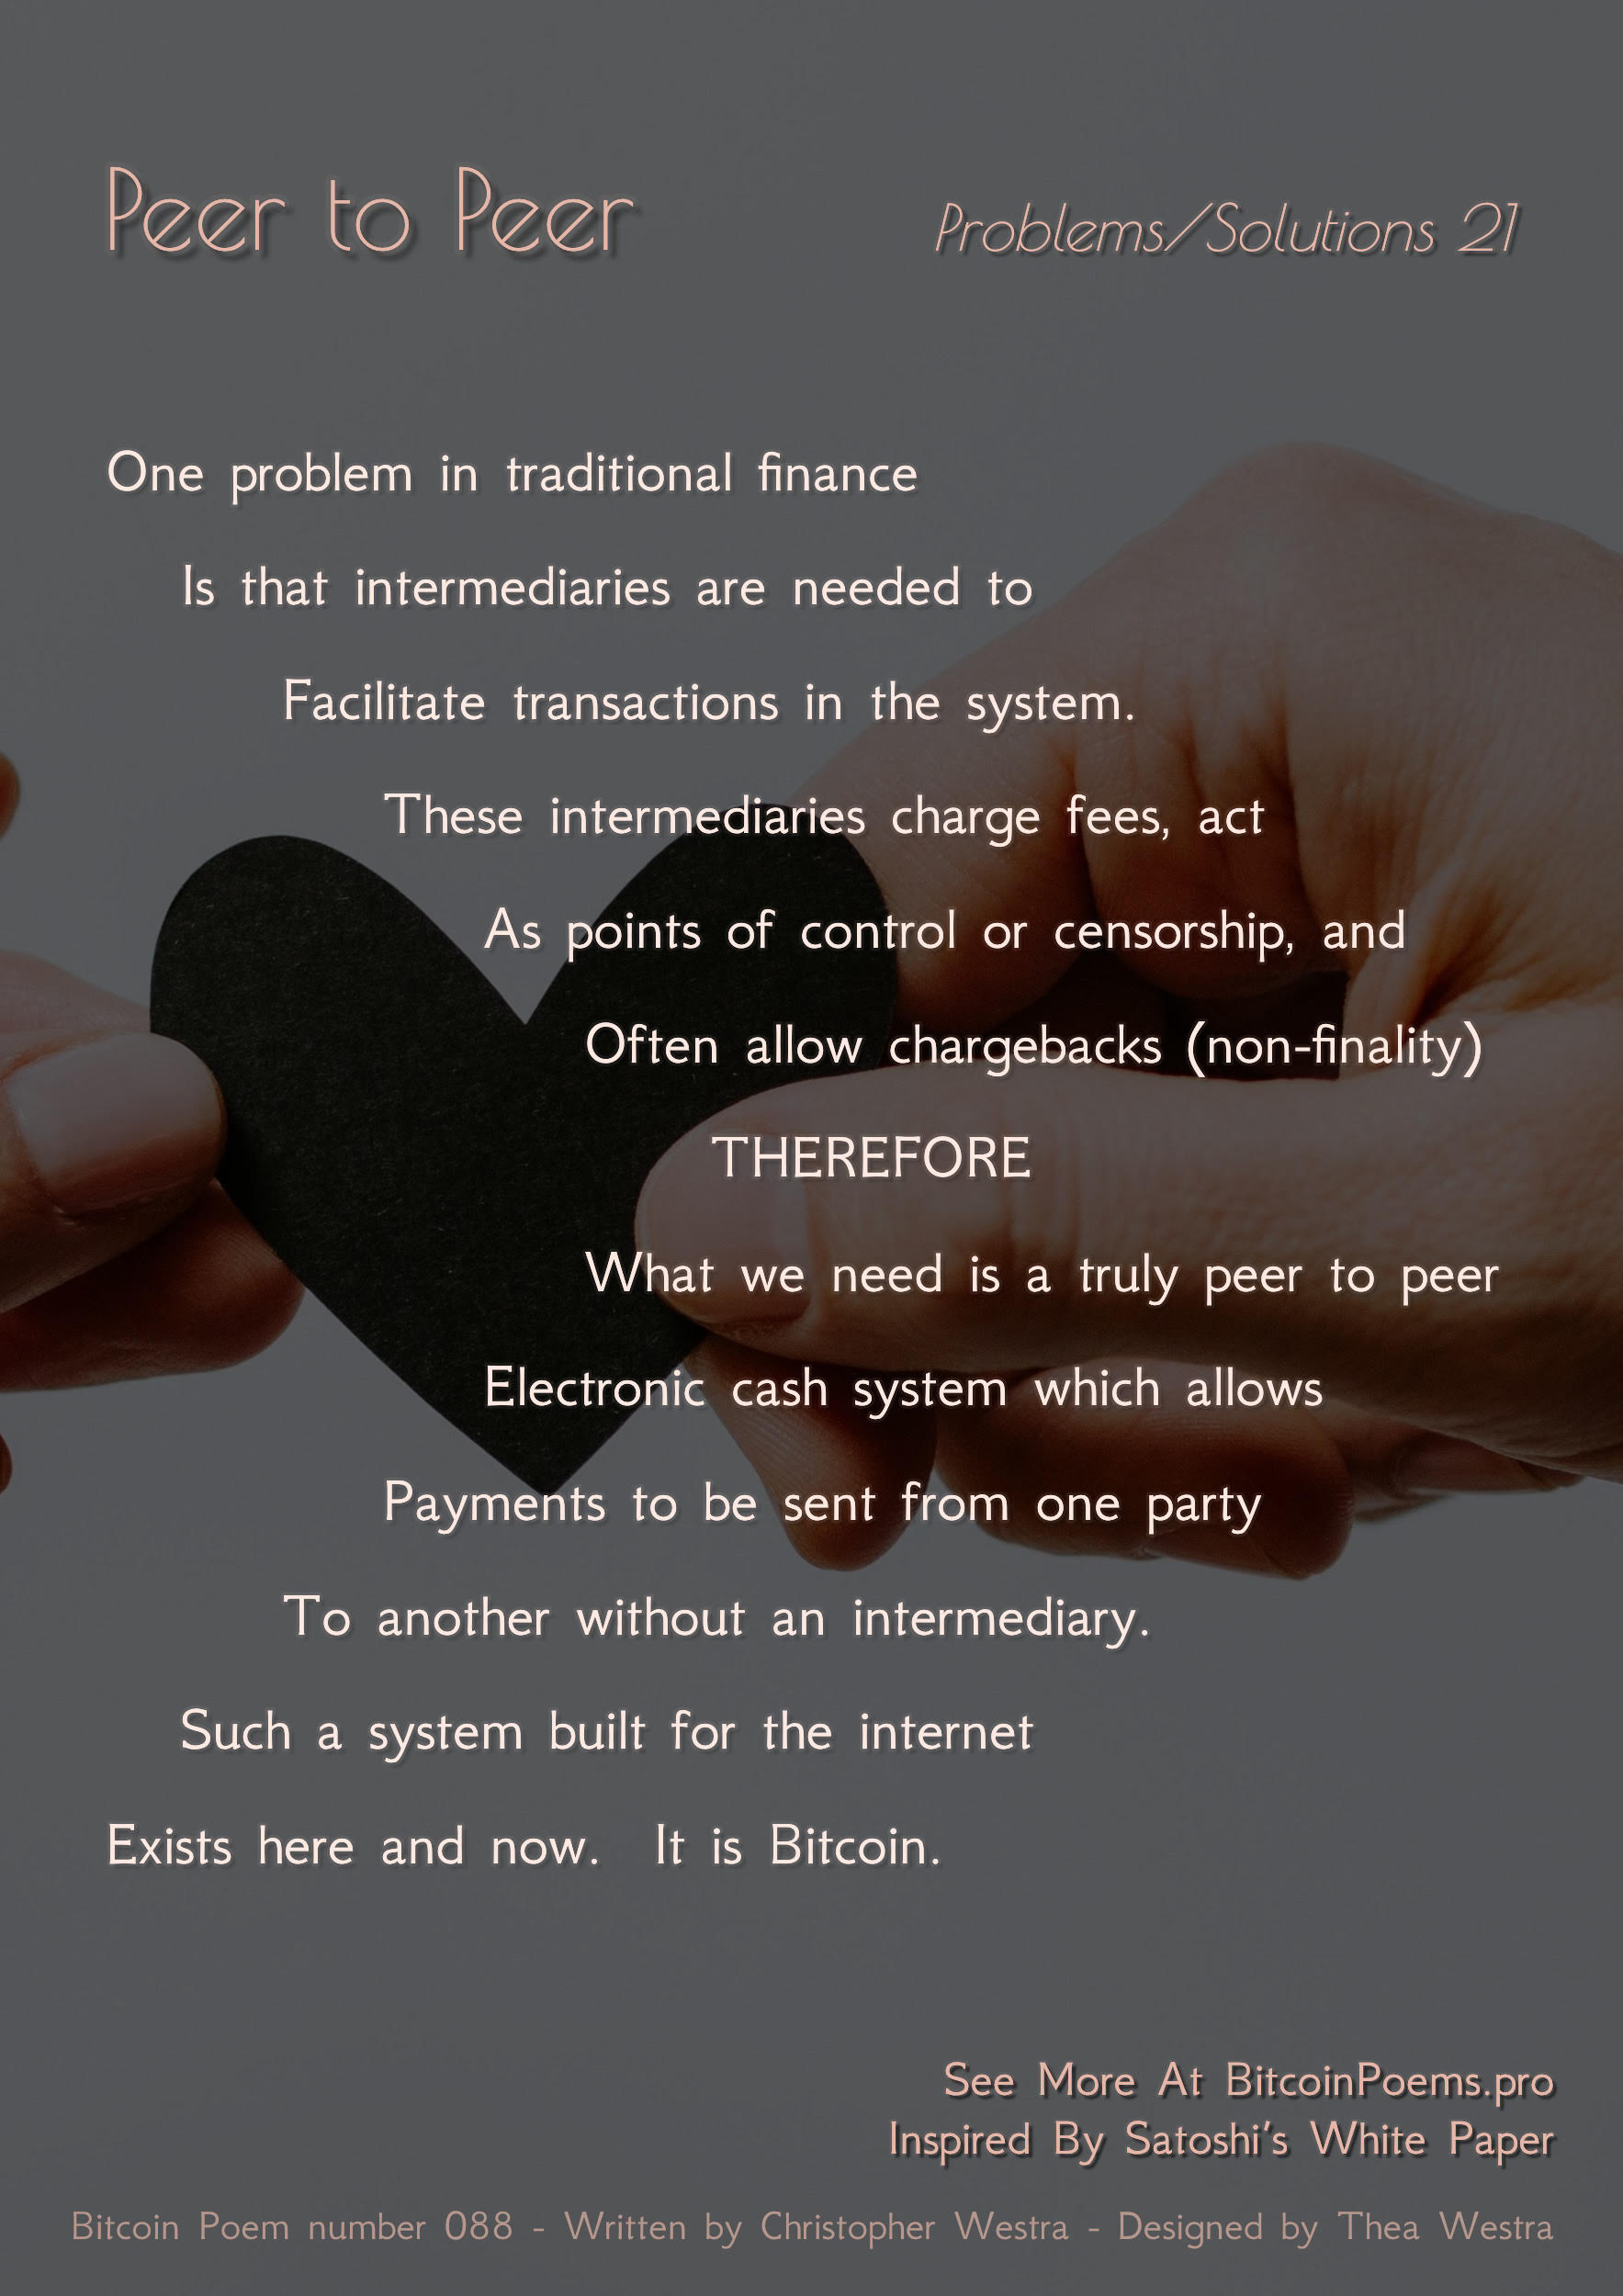 Peer to Peer - Bitcoin Poem 088 by Christopher Westra